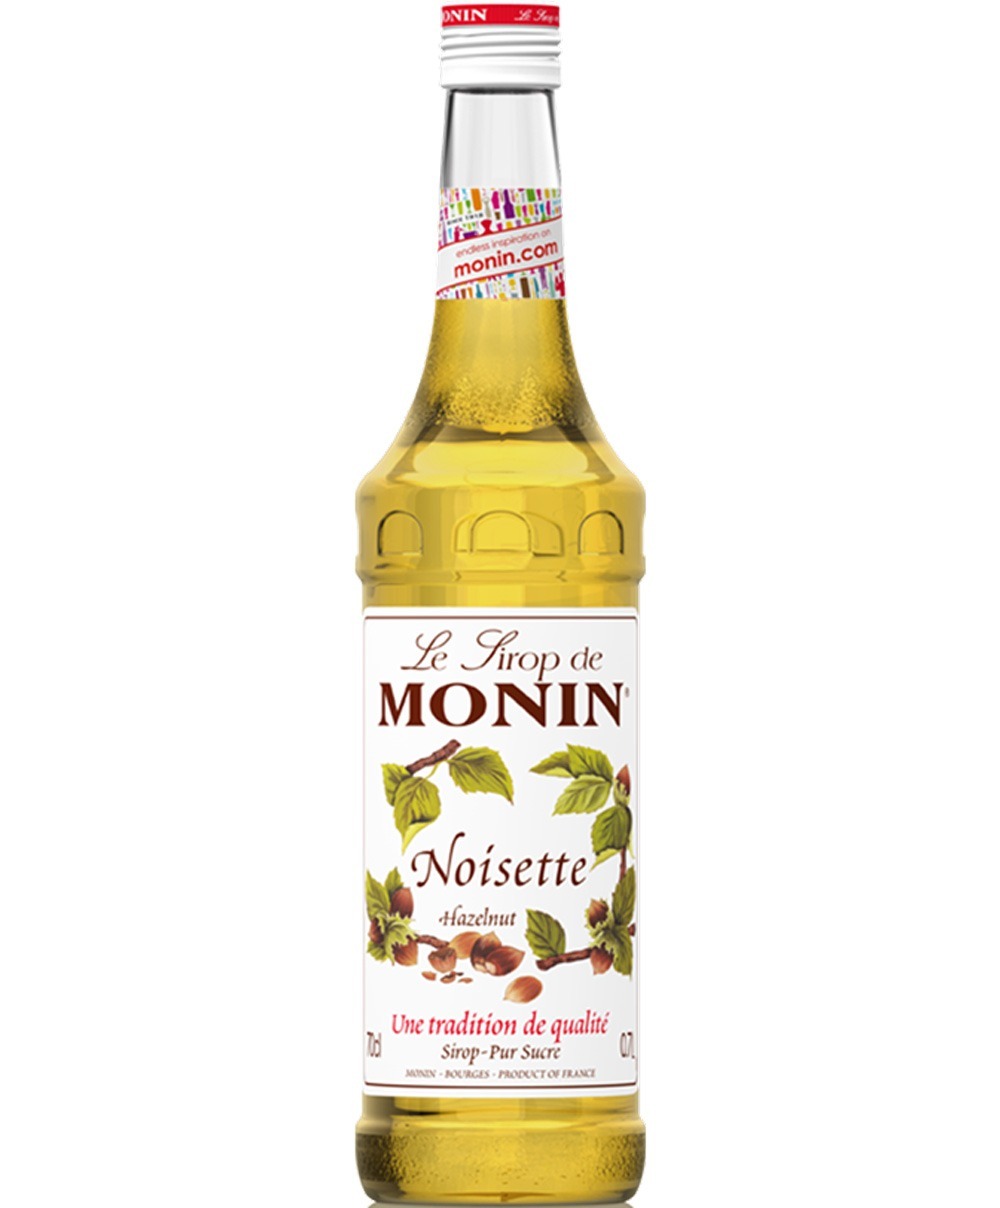 Syrup Monin Hazelnut - Hạt dẻ